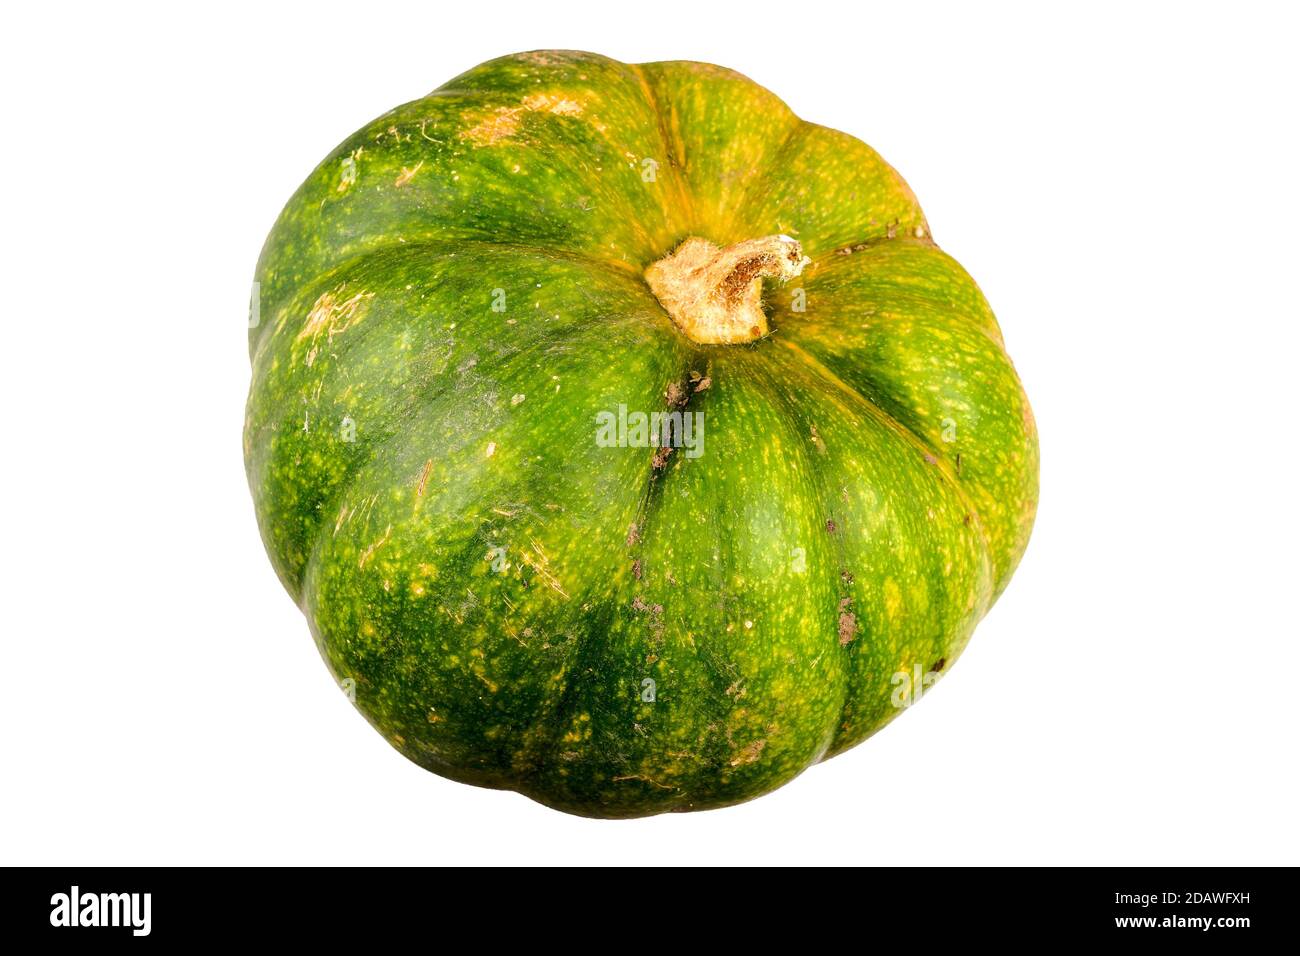 Yellow-green round pumpkin isolated on white background. Stock Photo